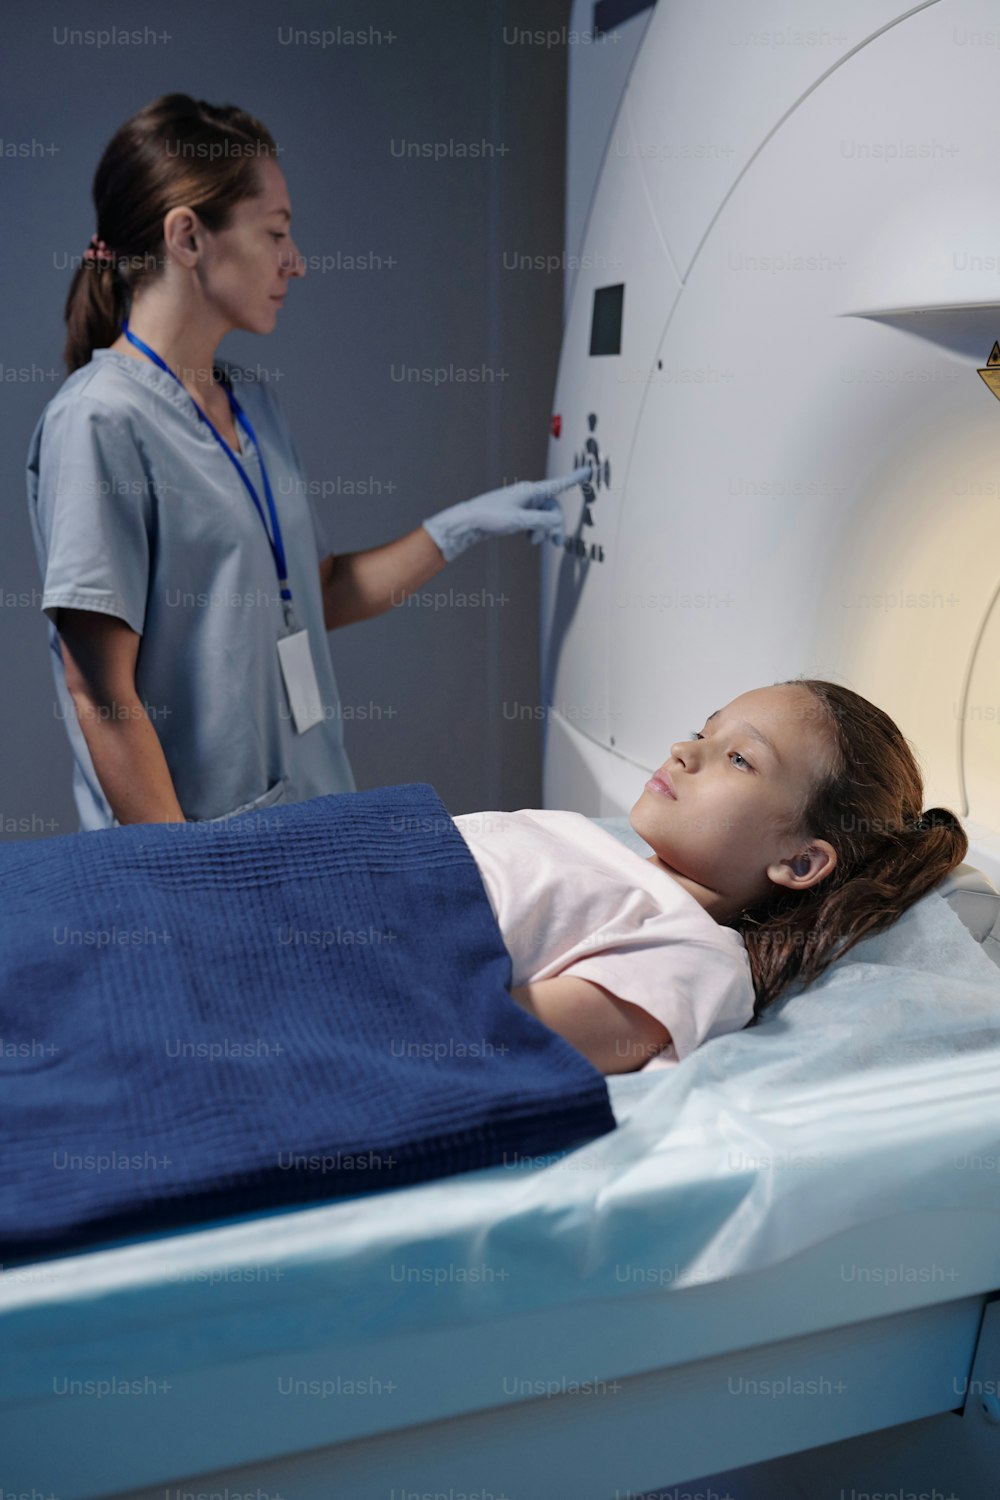 MRIスキャン検査を受けている小さな患者の間にコントロールパネルのボタンを押す女性医師